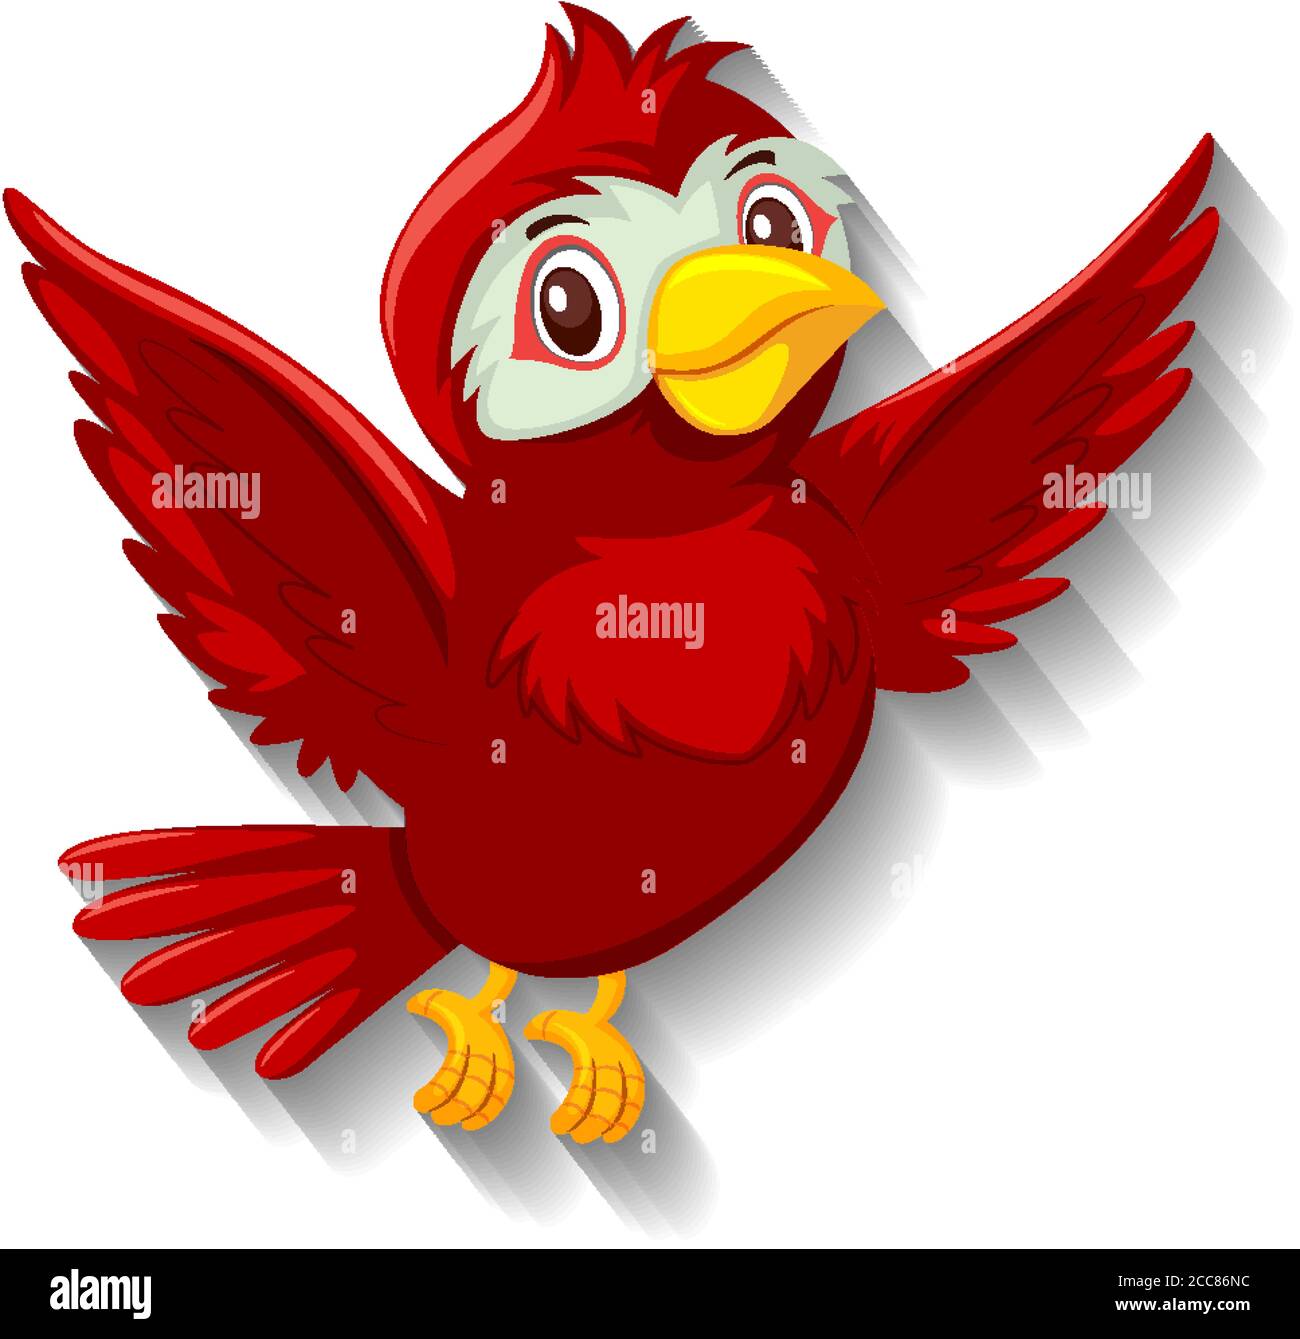 red bird cartoon character illustration Stock Vector Image & Art - Alamy